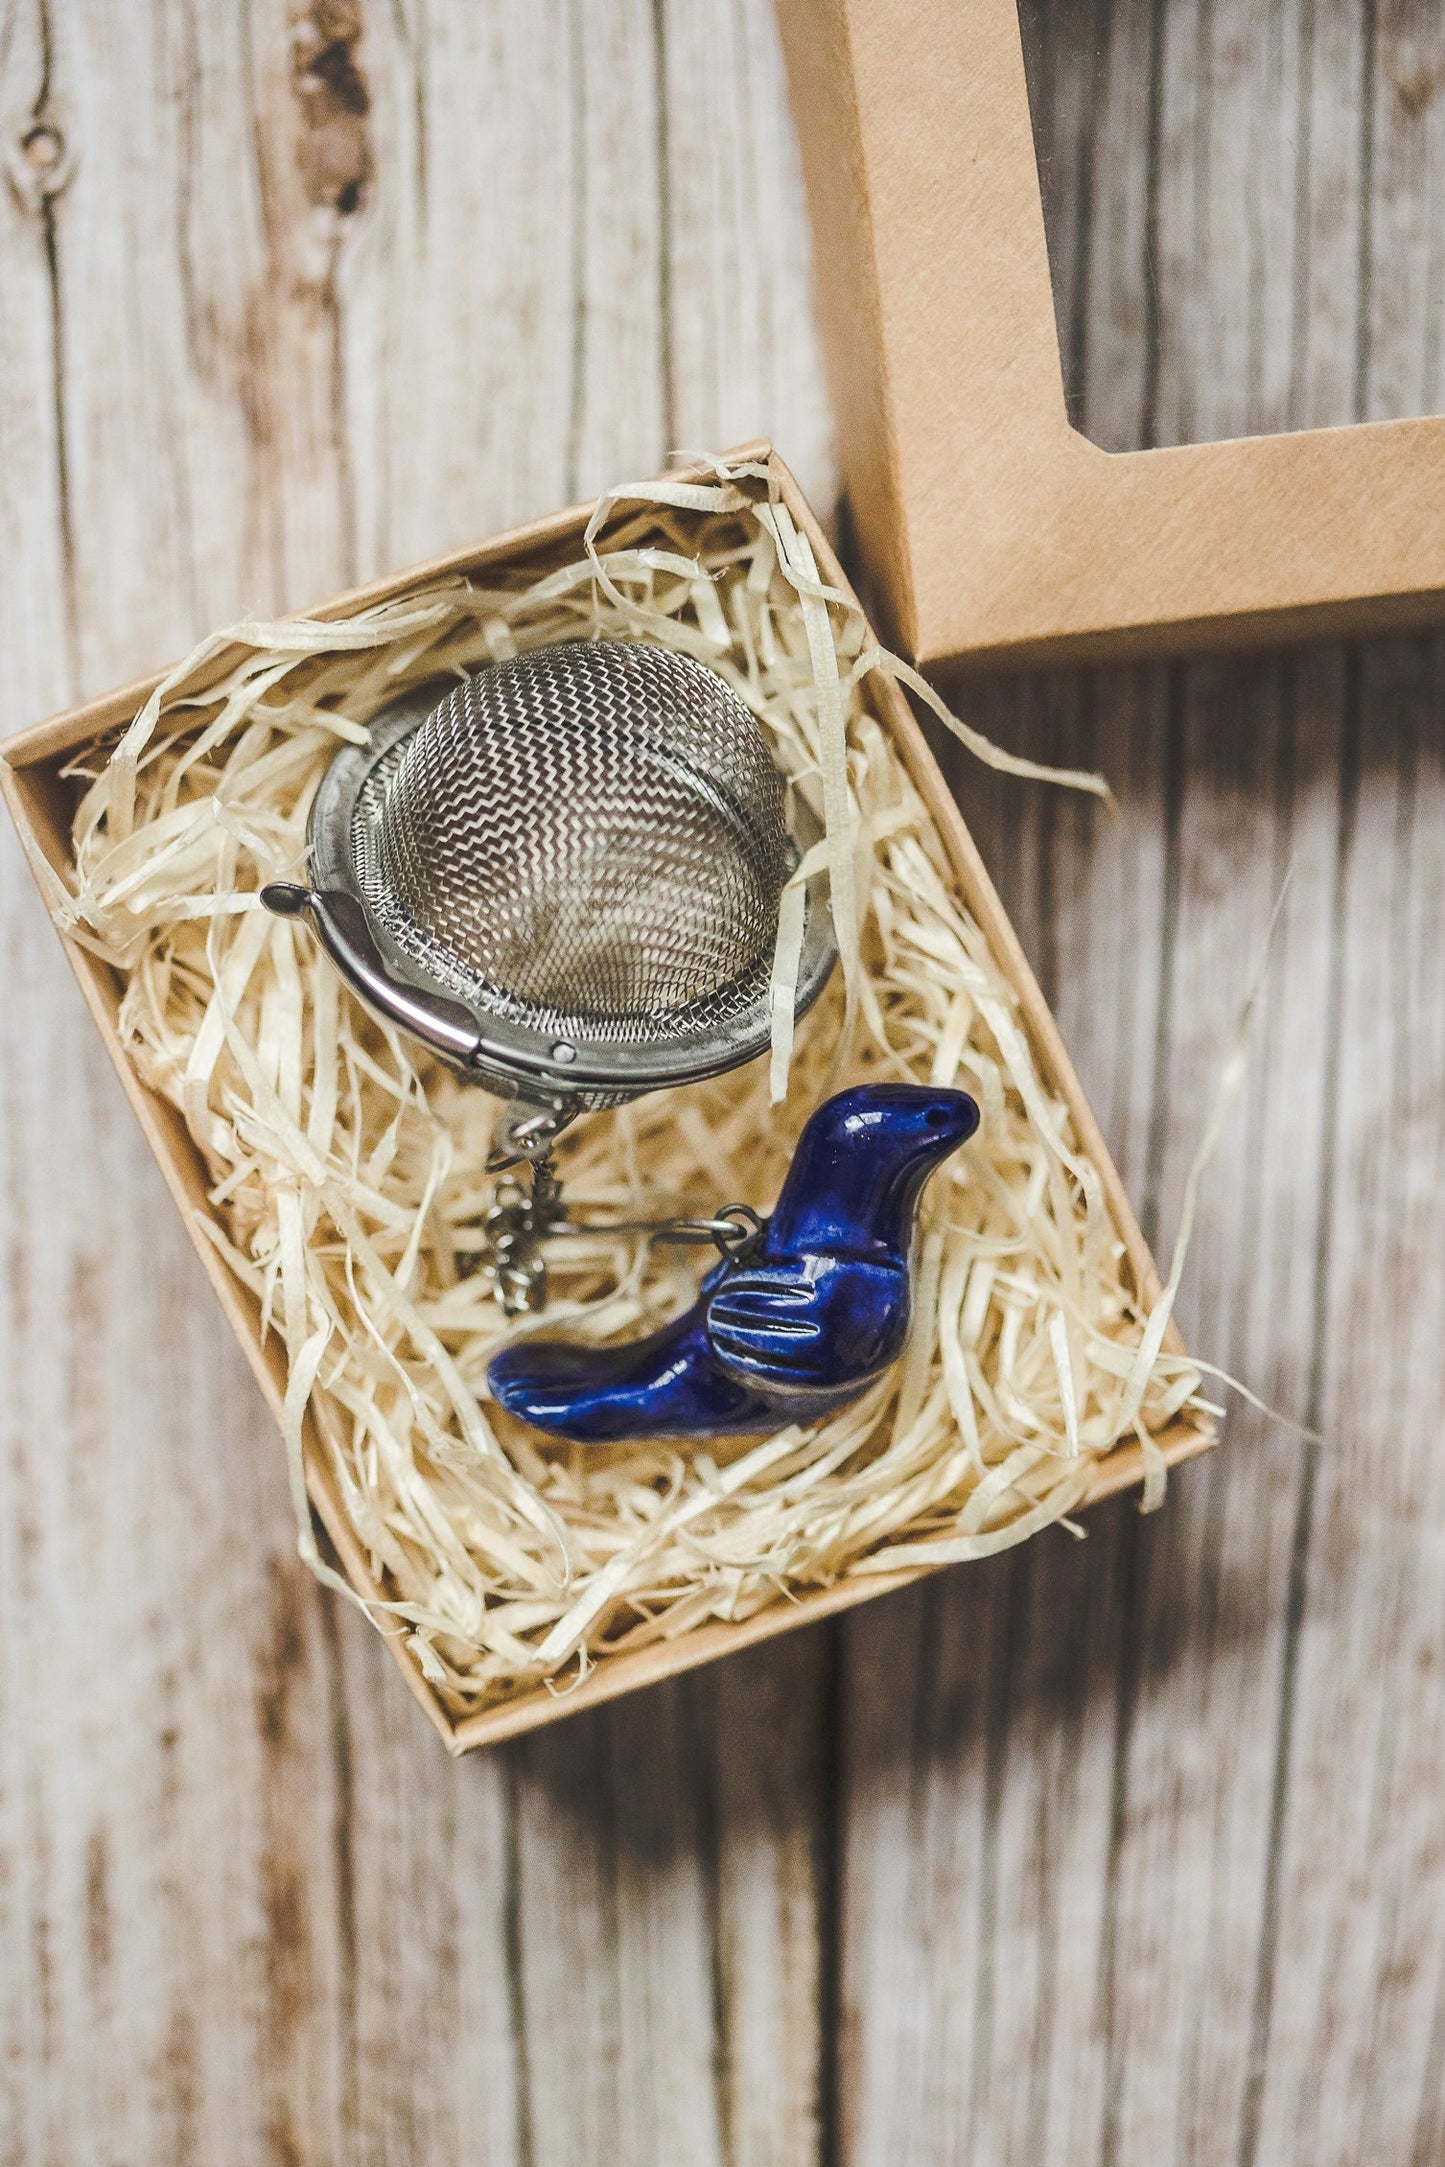 Tea strainer with ceramic dark blue bird - Loose leaf tea infuser with blue bird charm - Christmas gift